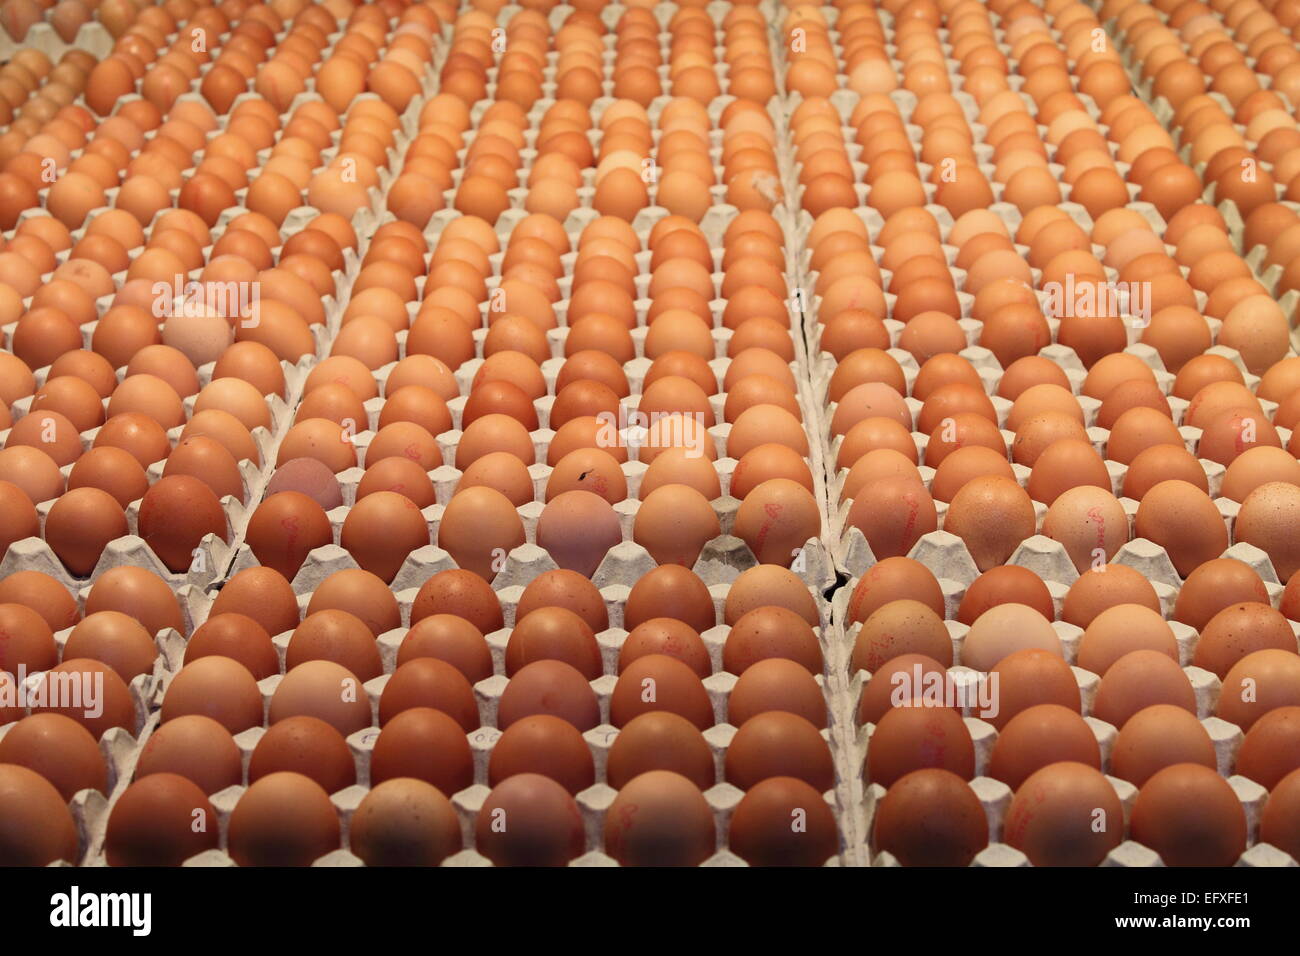 Many brown eggs in carton tray Stock Photo